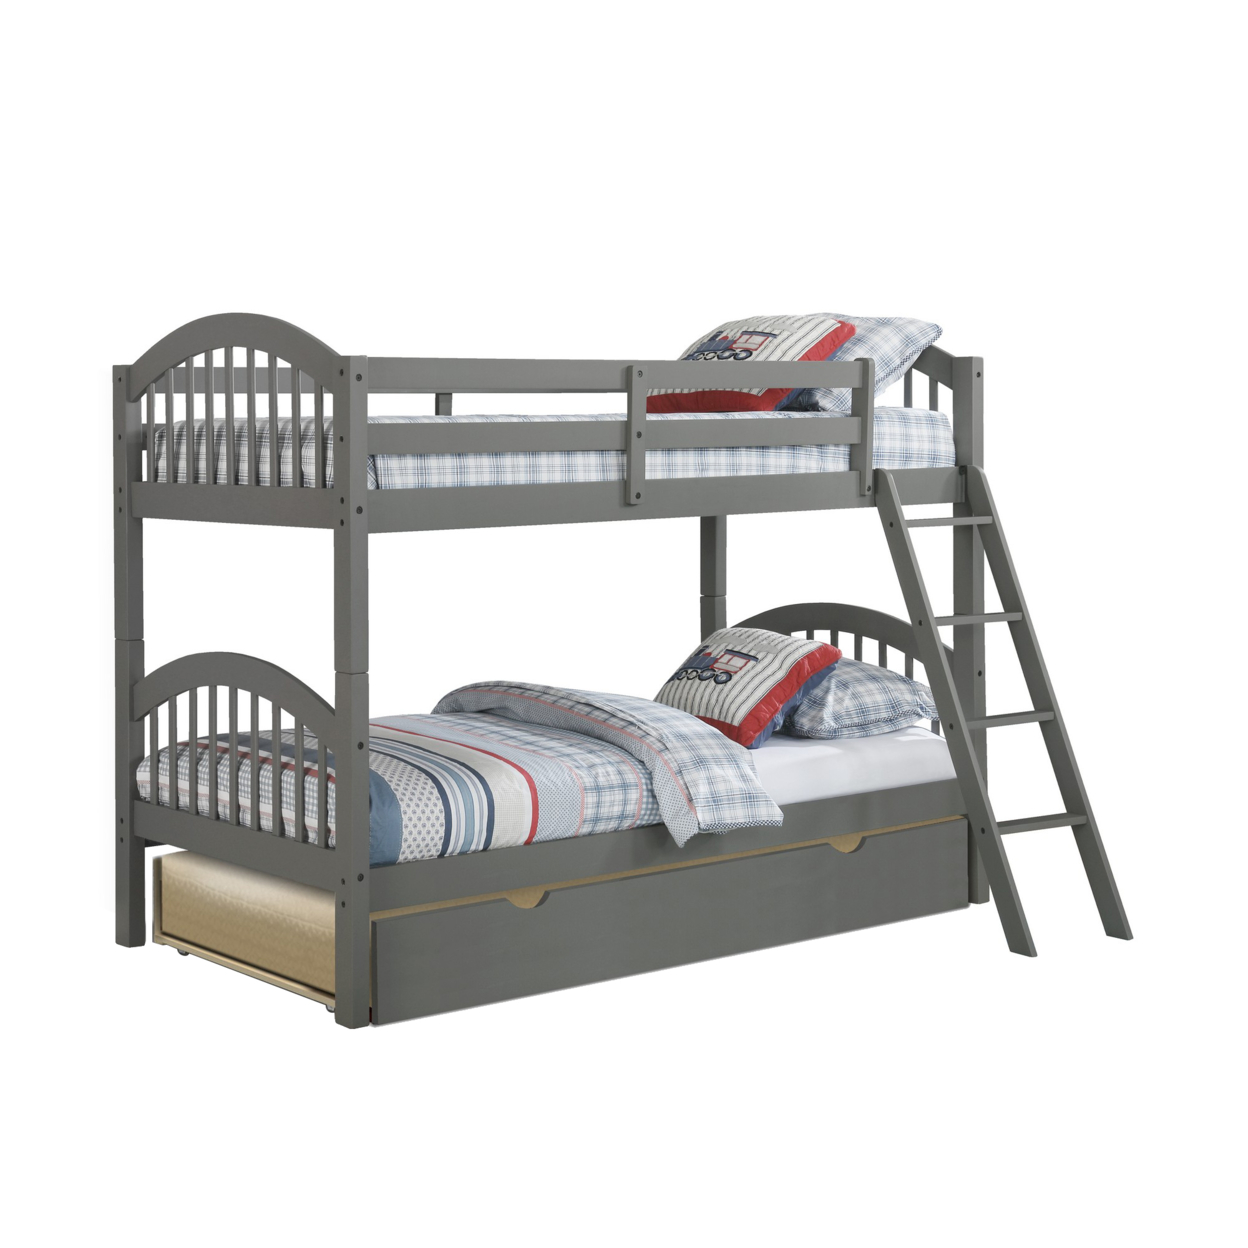 Diana Modern Wood Twin Bunk Beds With Trundle, Slatted Arch Headboard, Gray- Saltoro Sherpi